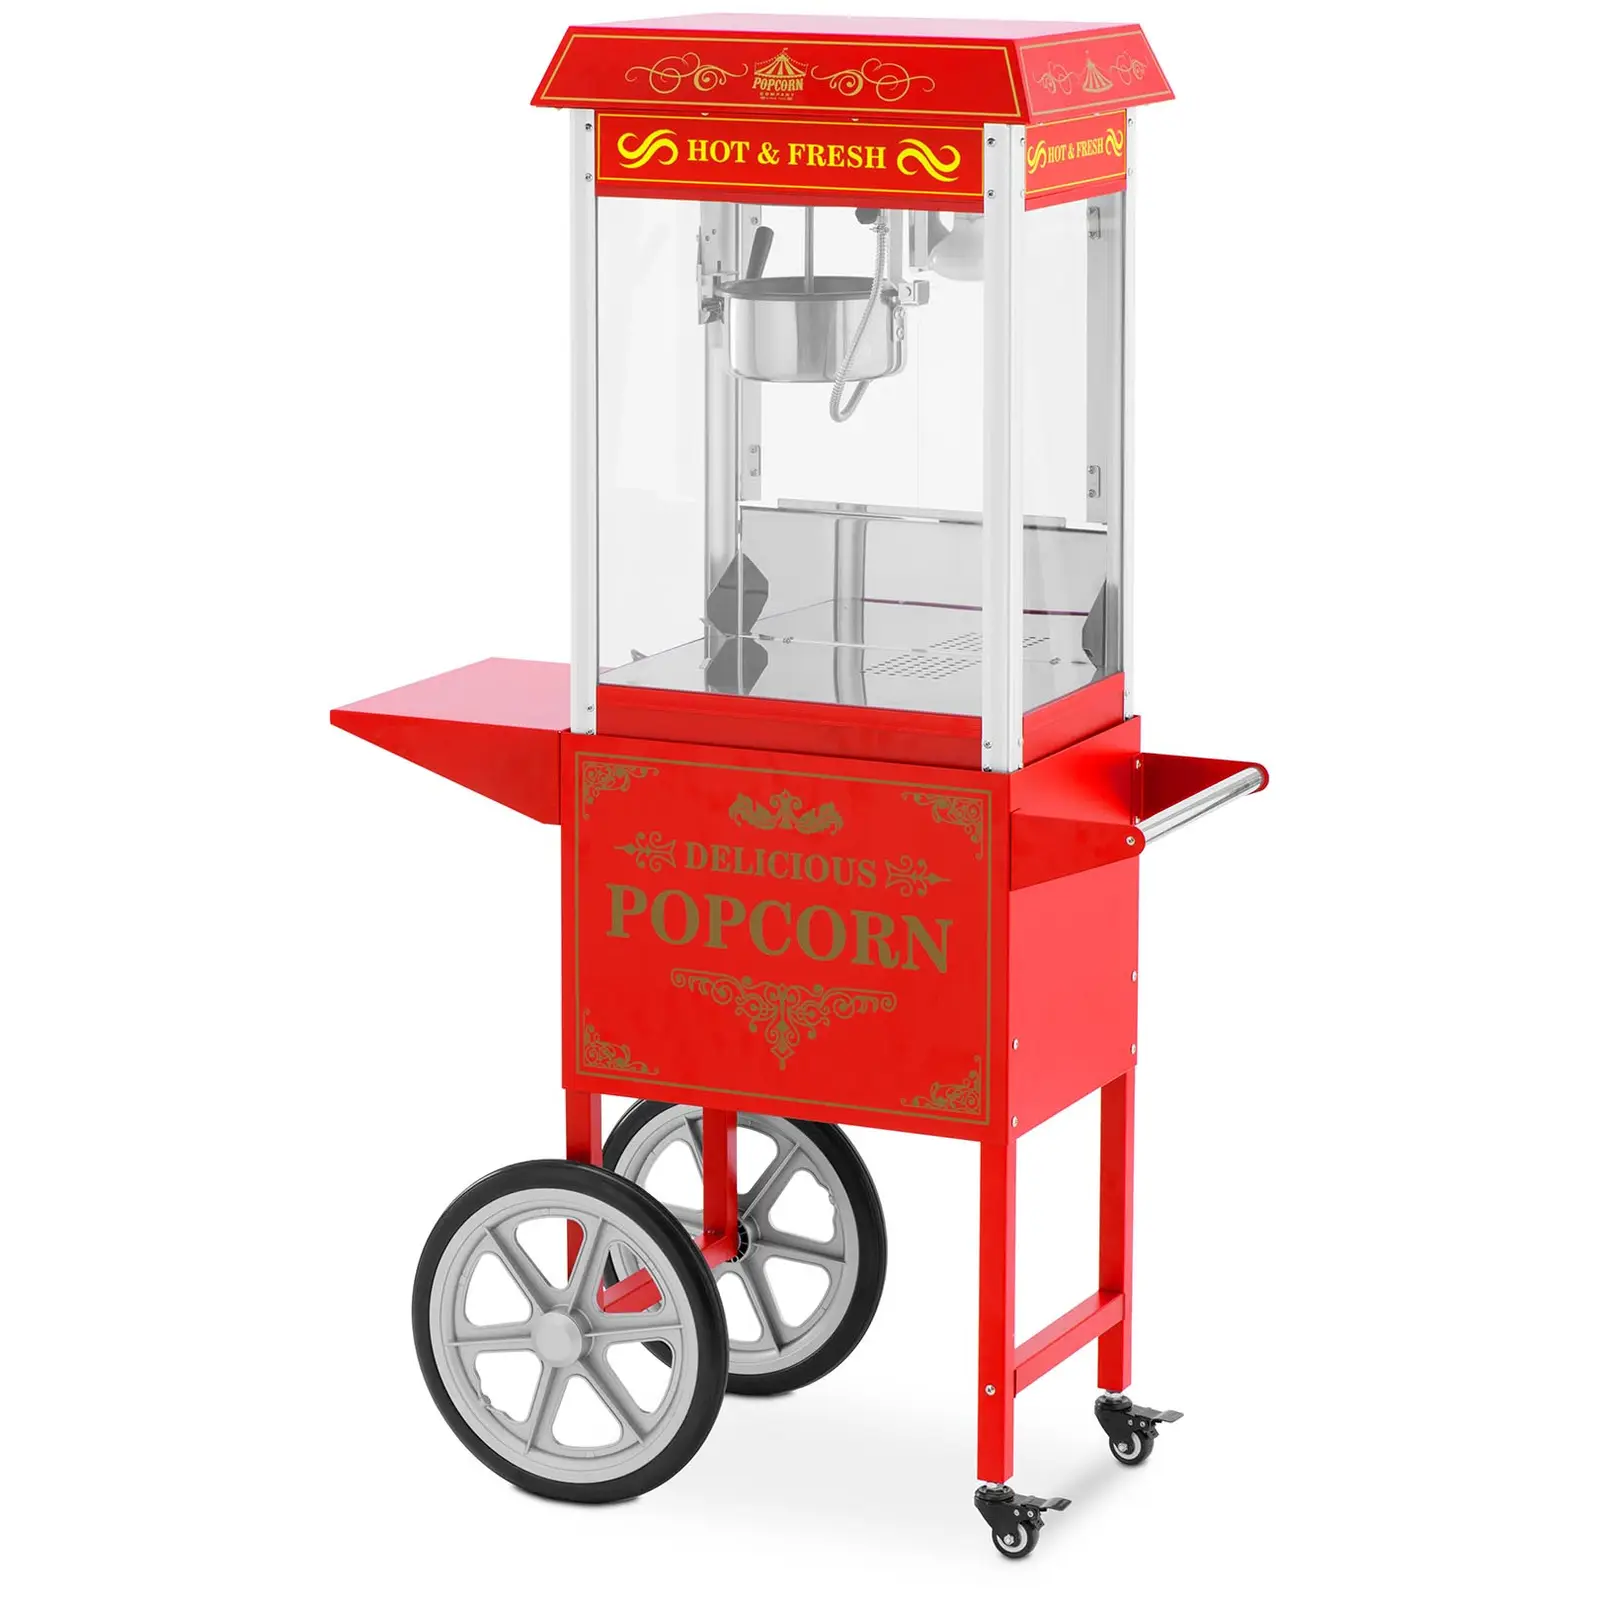 B-Ware Popcornmaschine mit Wagen - Retro-Design - 150 / 180 °C - rot - Royal Catering